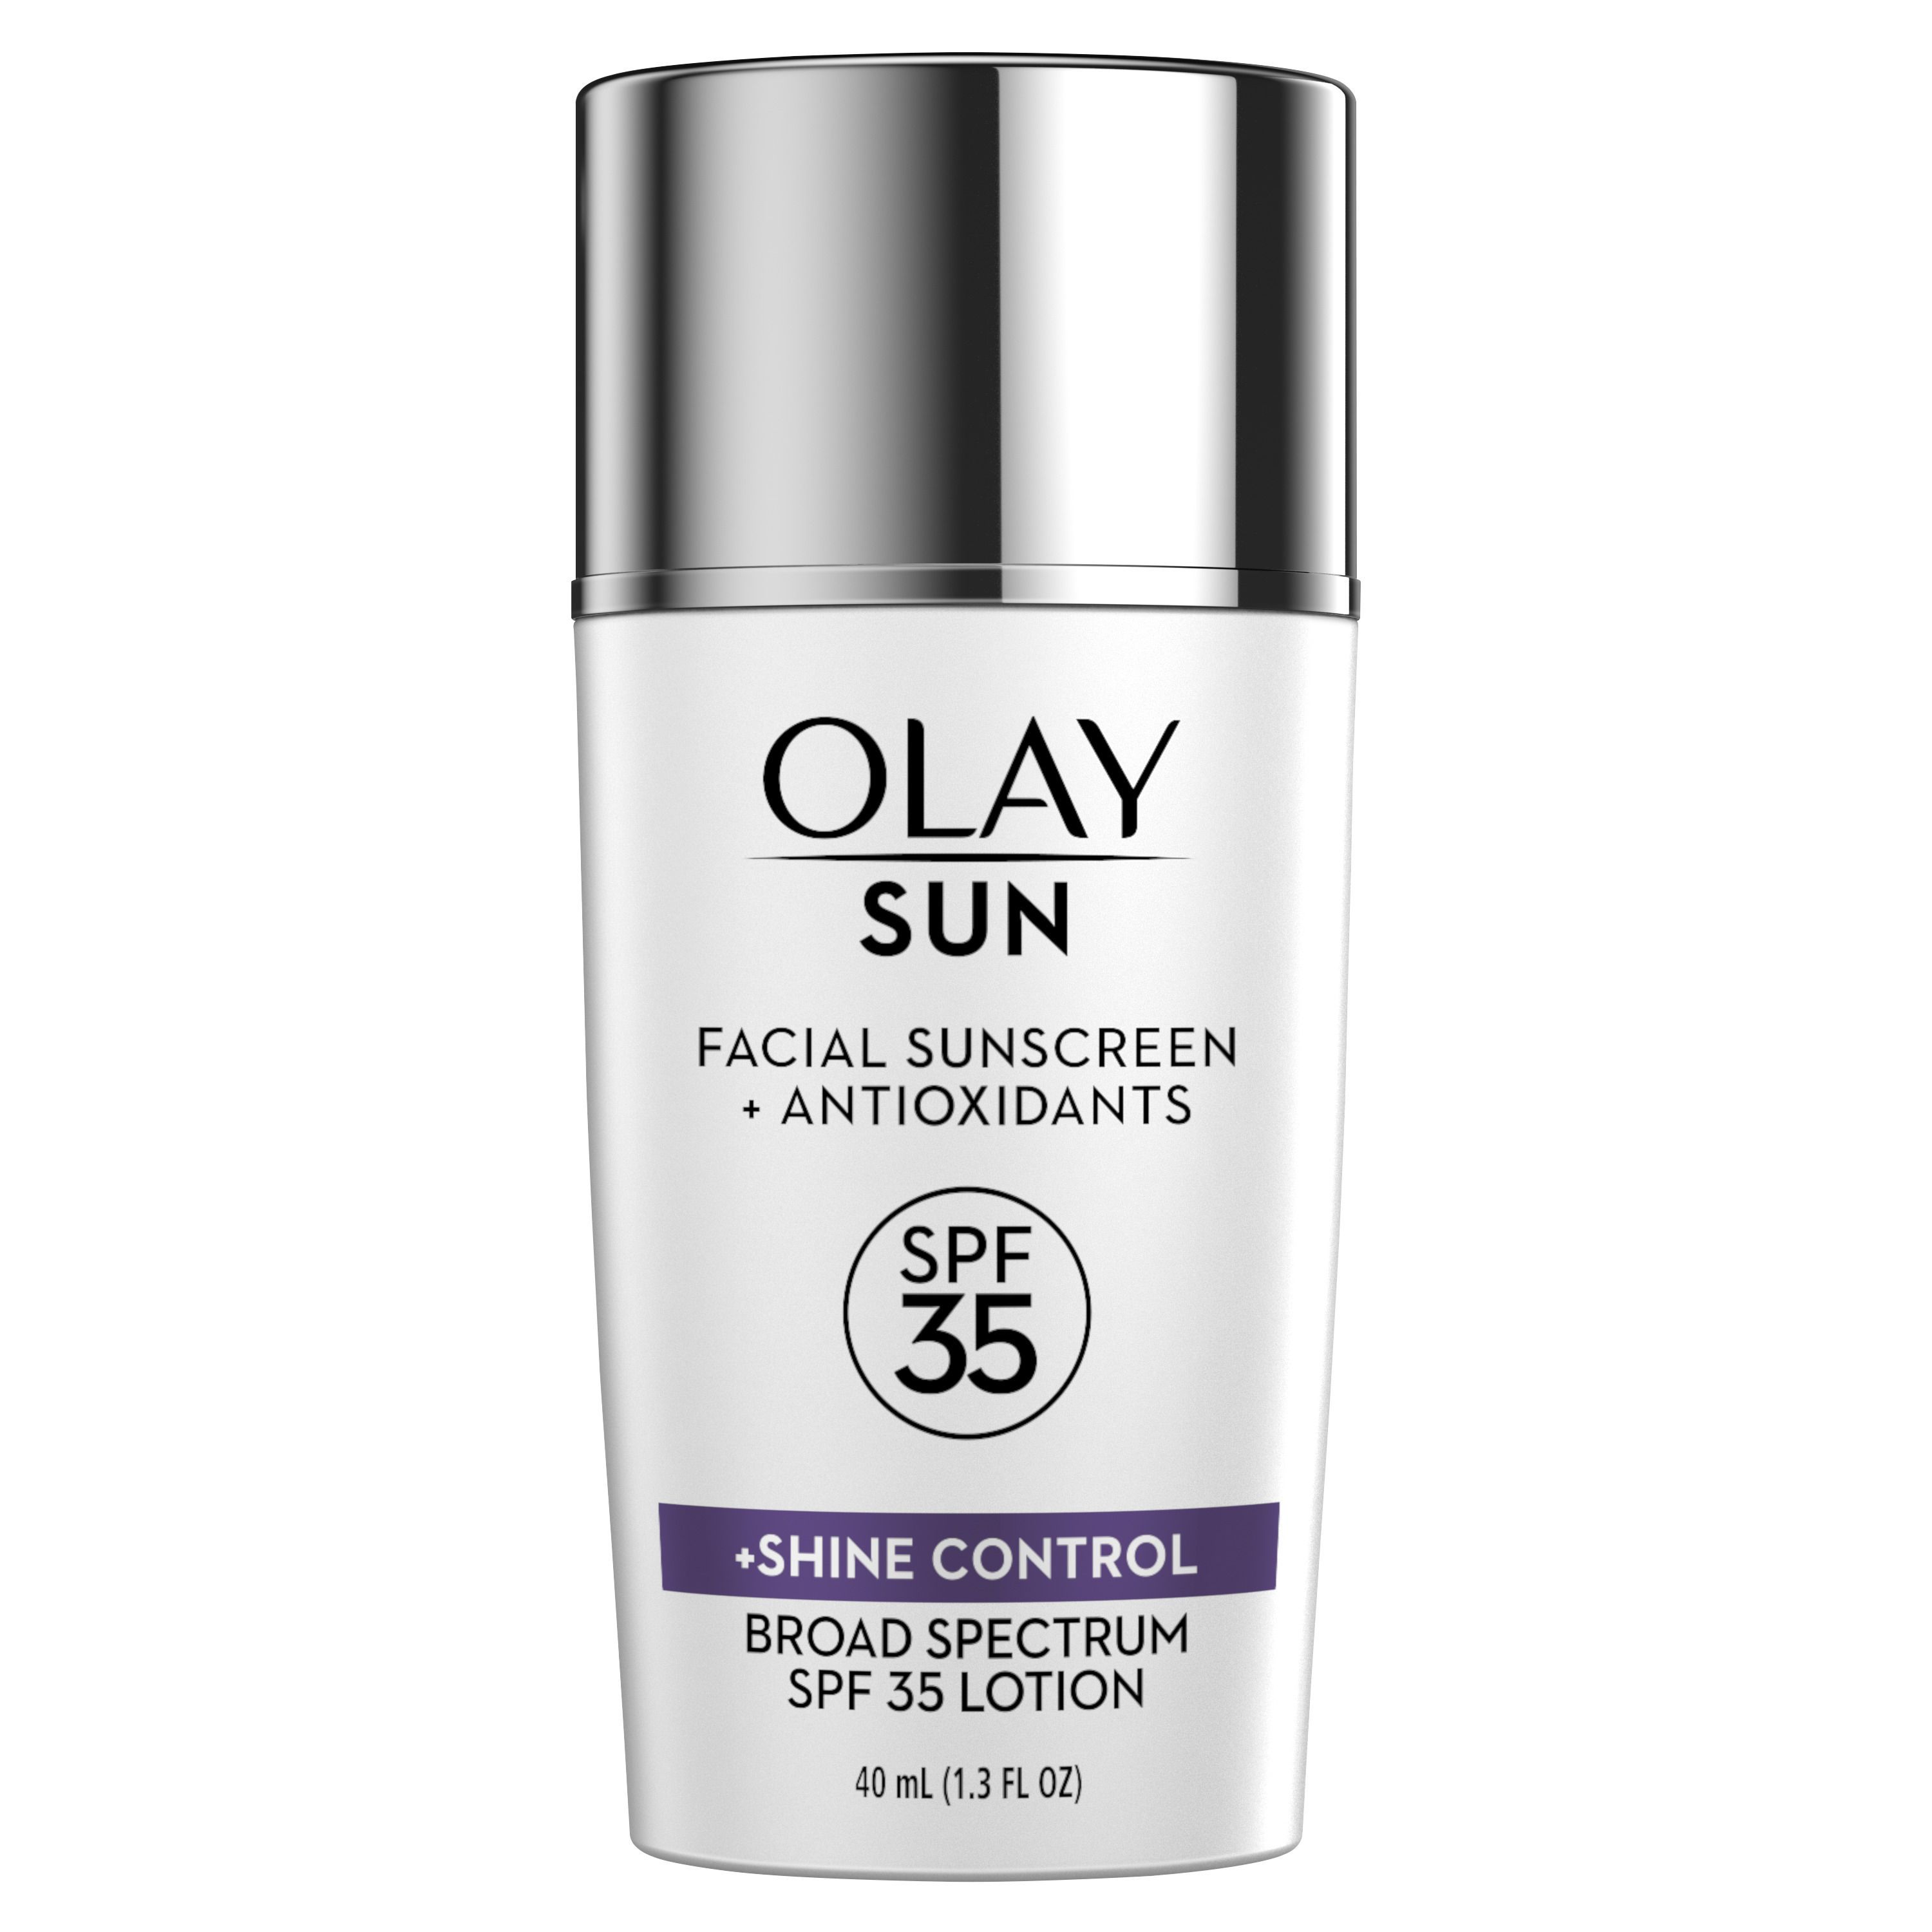 Sun Facial Sunscreen + Antioxidants Broad Spectrum SPF 35 Lotion Shine Control